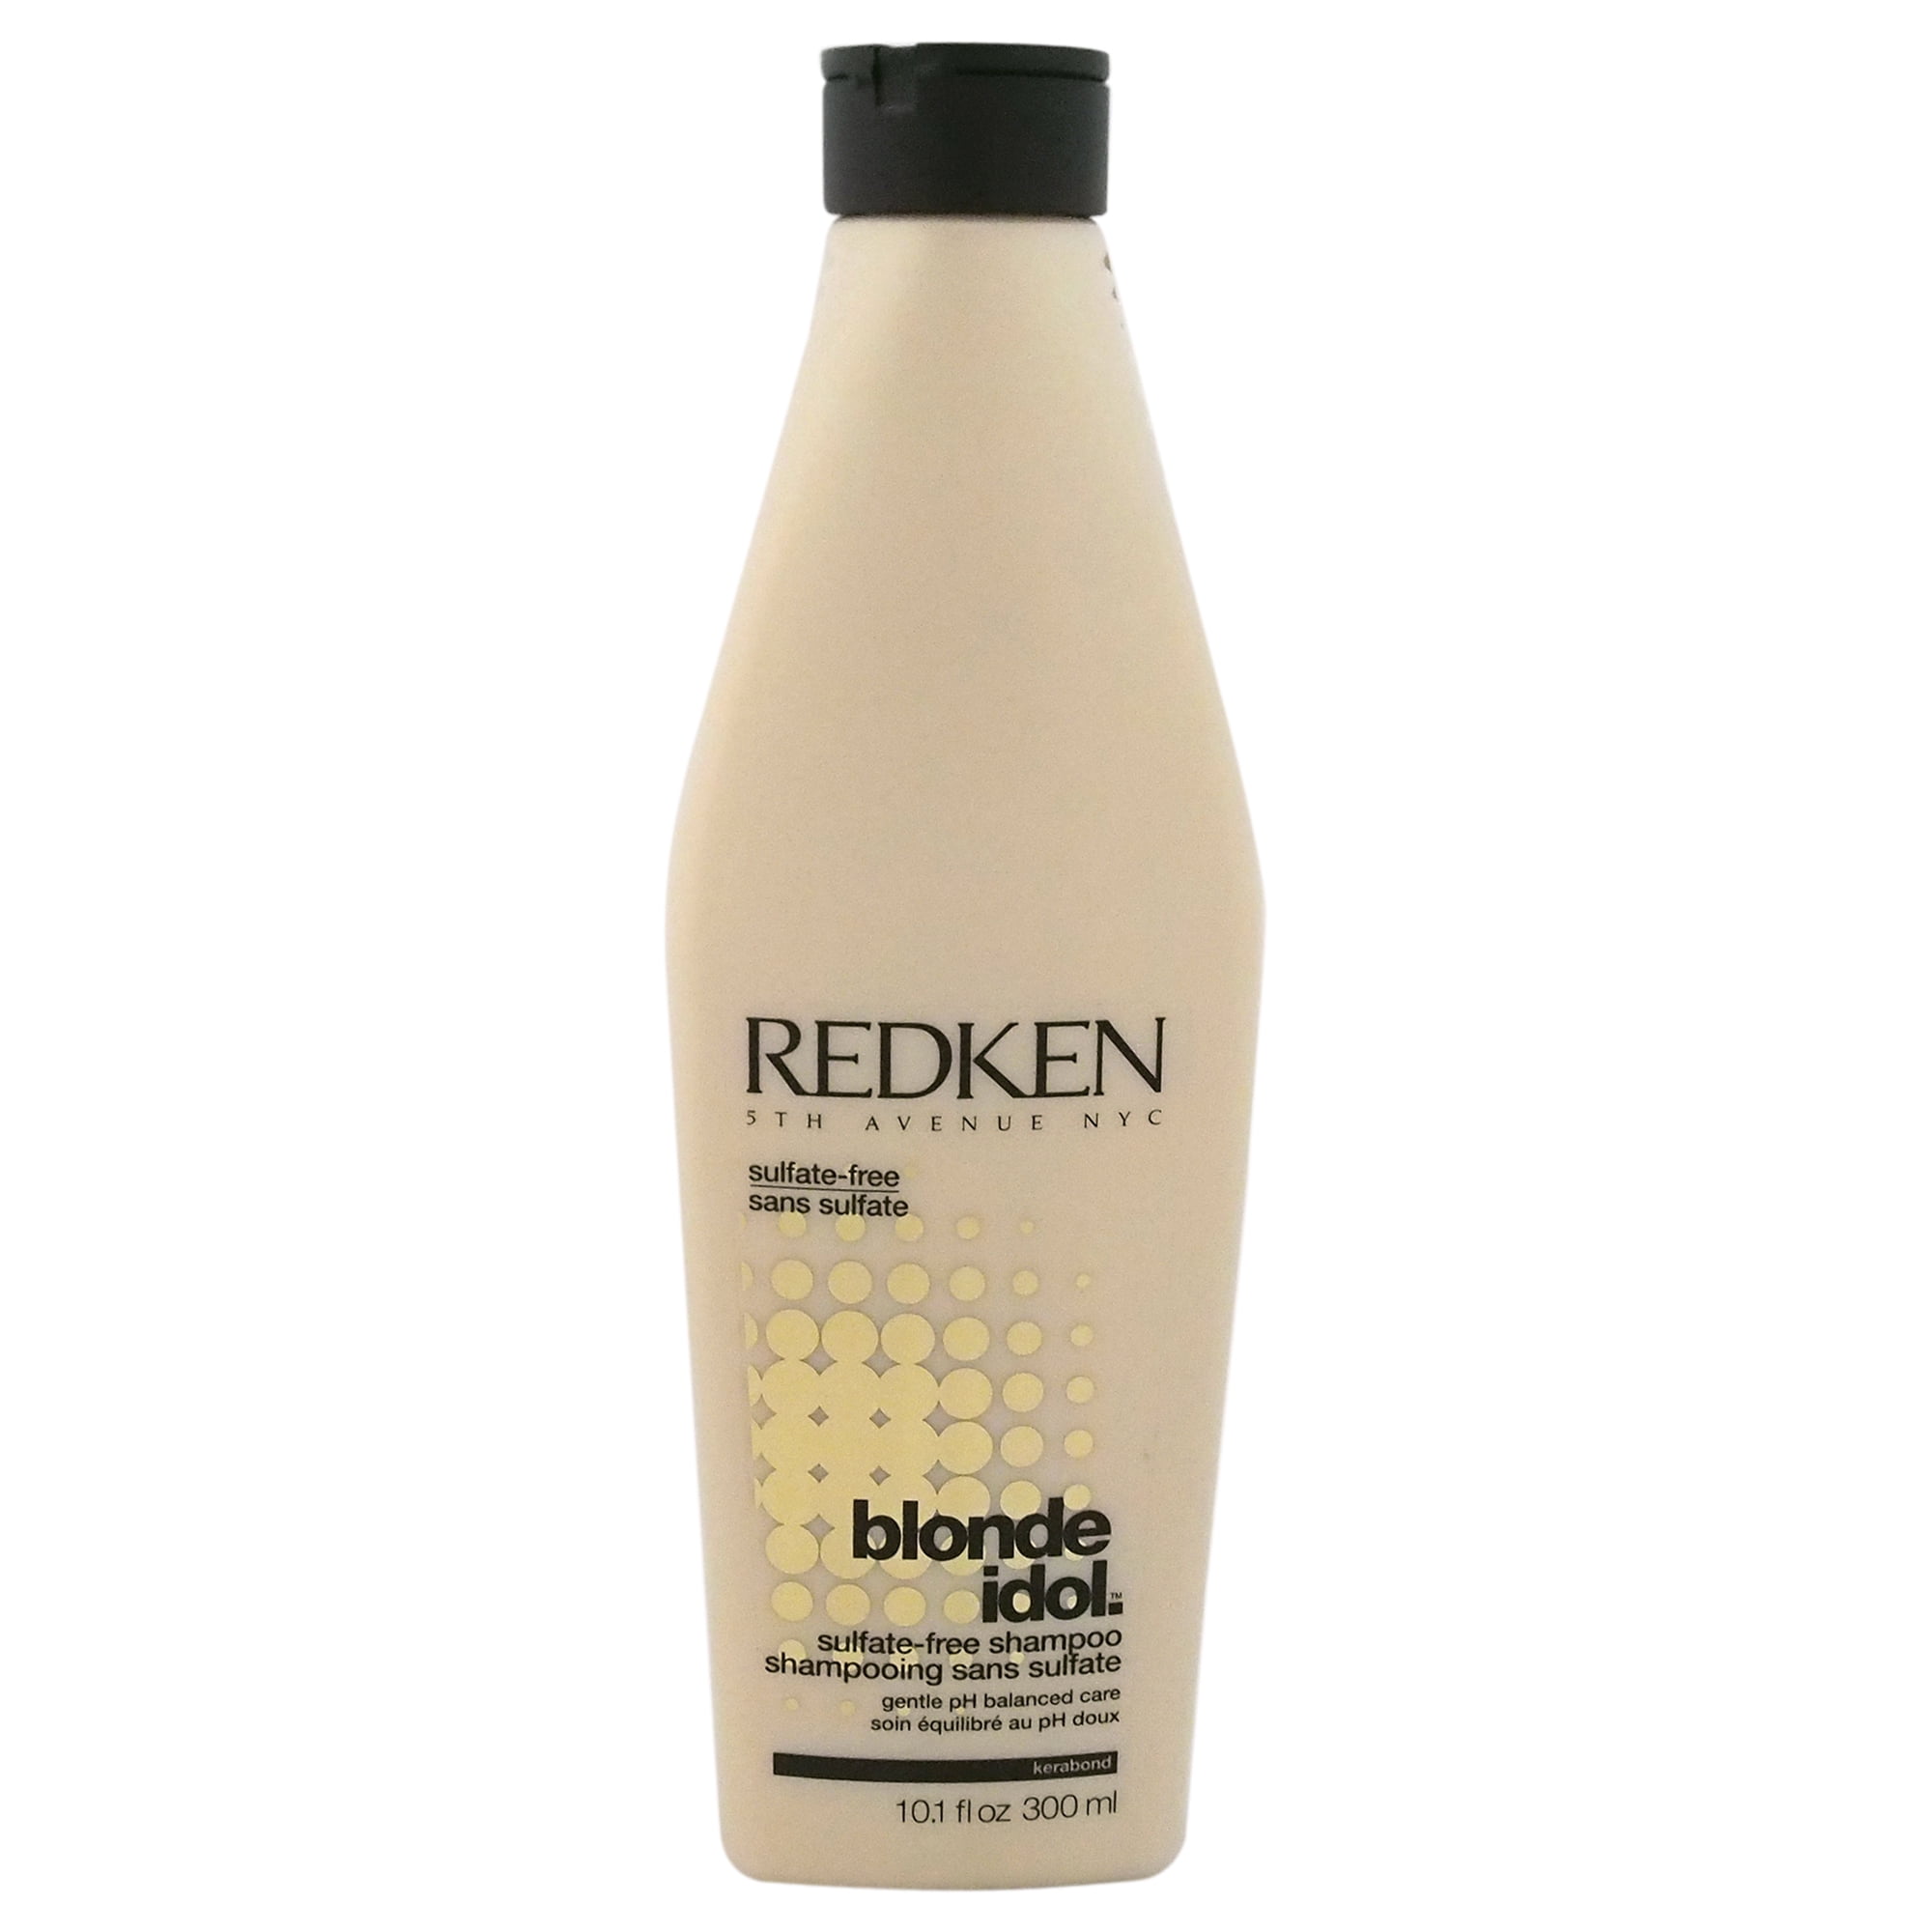 Redken Paraben-Free Shampoos for sale